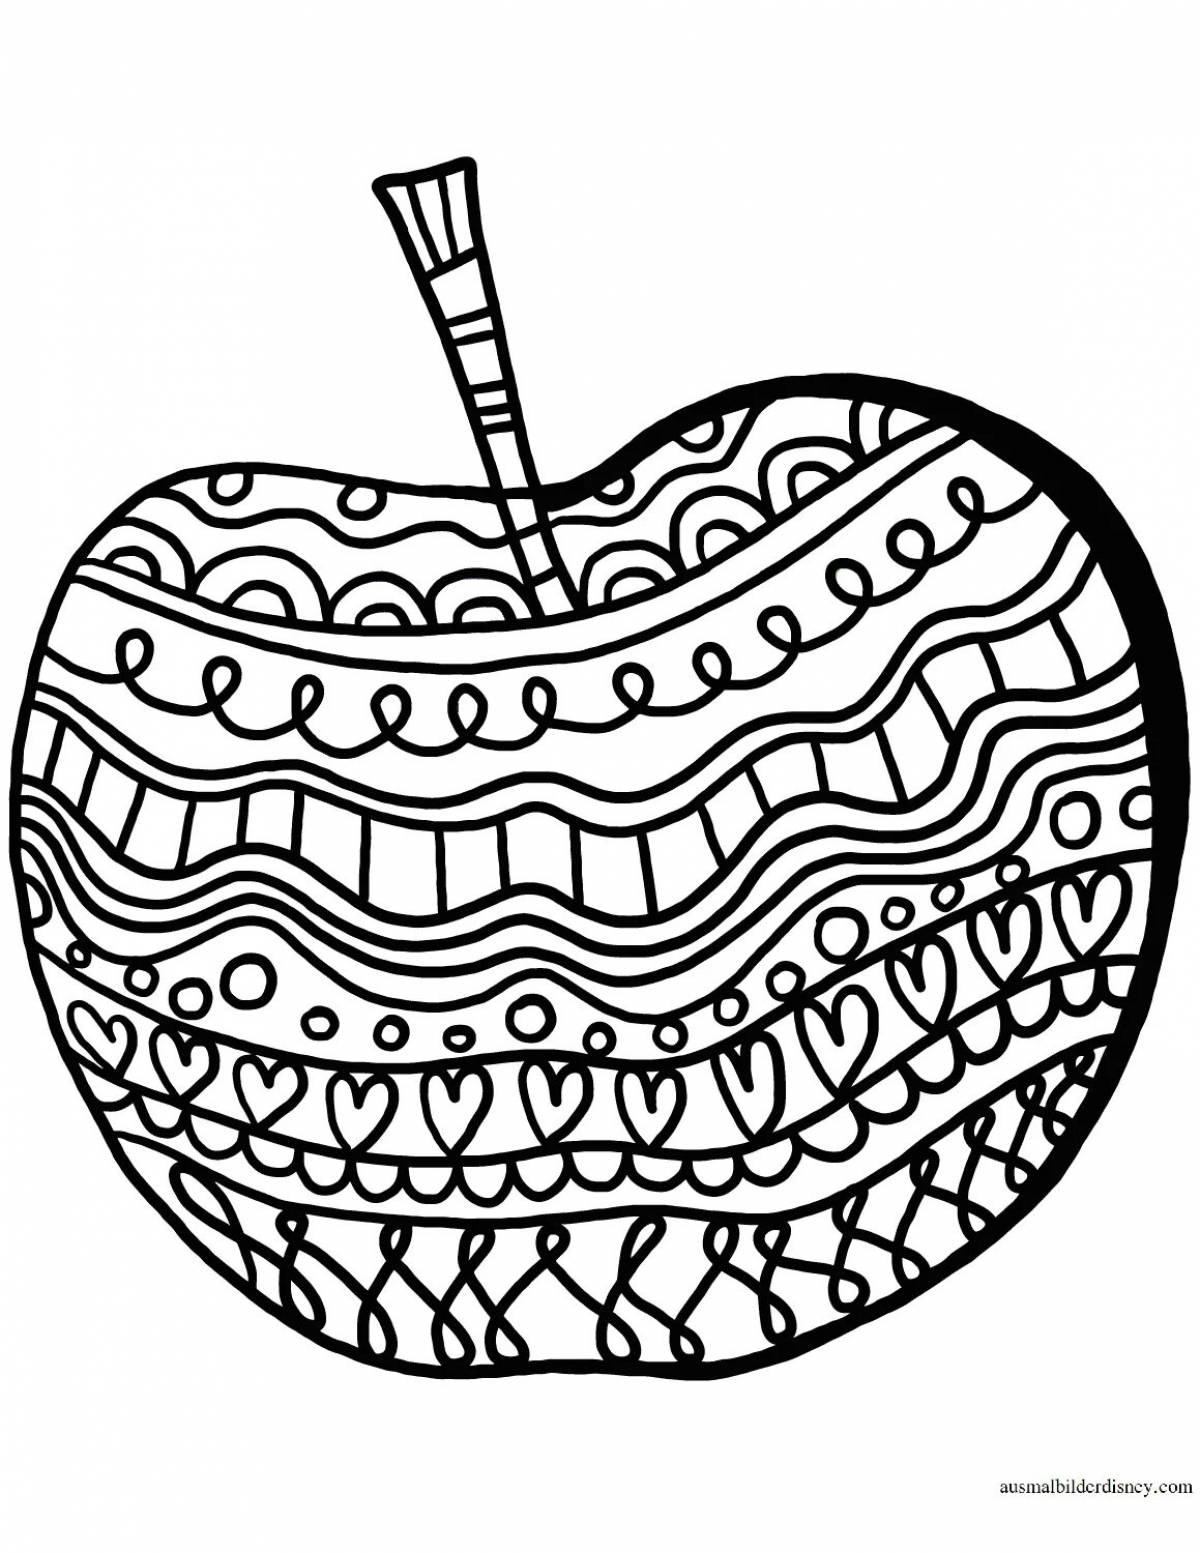 Delightful anti-stress apple coloring book